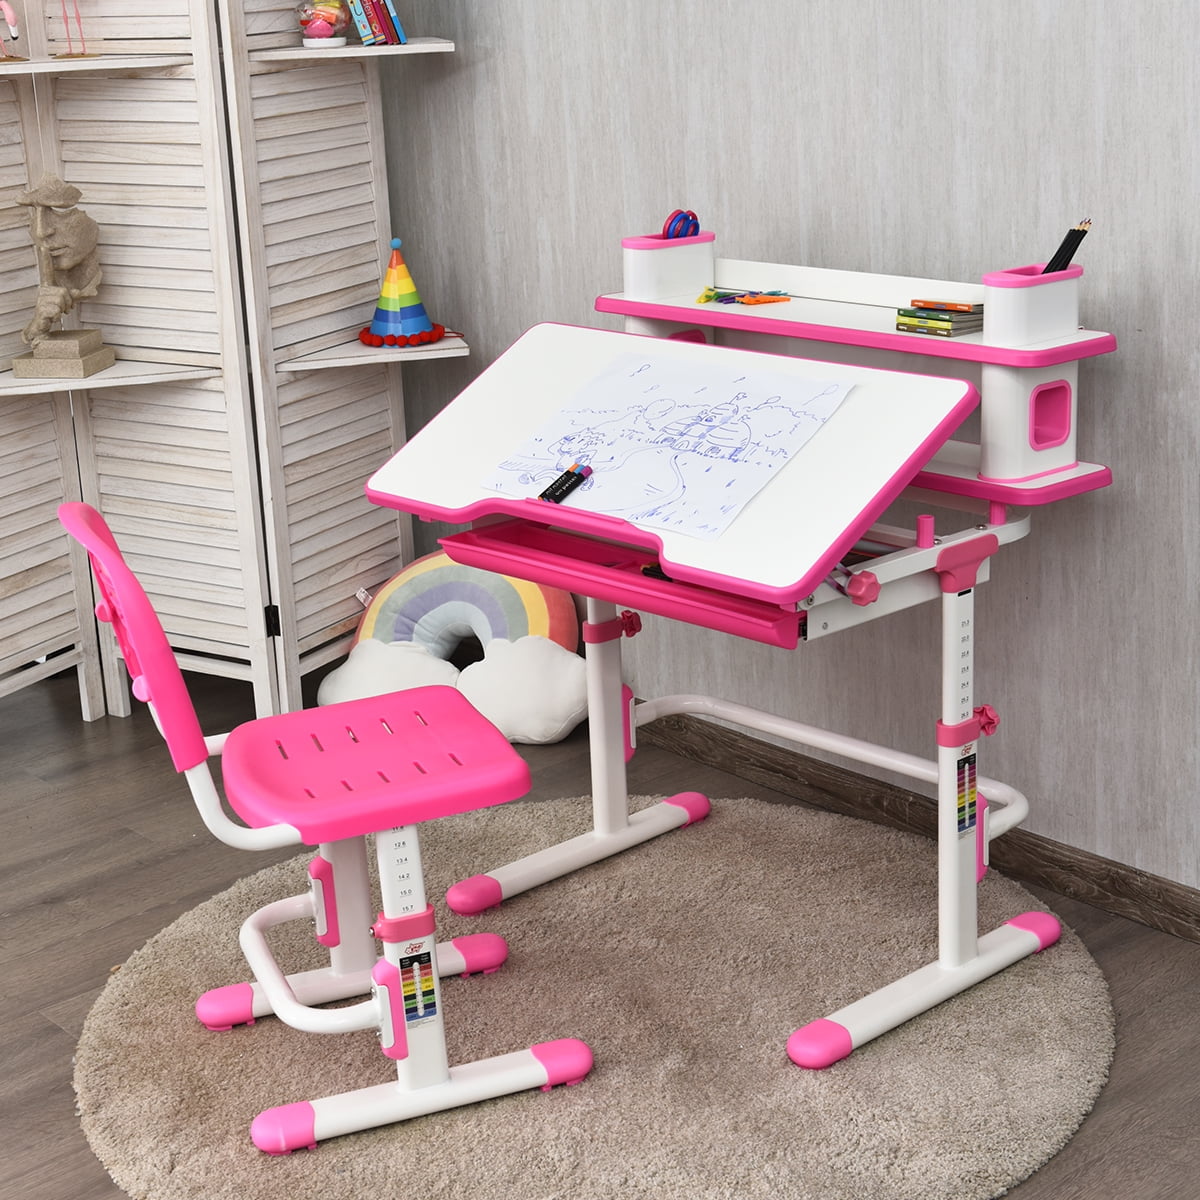 costway children's desk chair set height adjustable study table bluepink